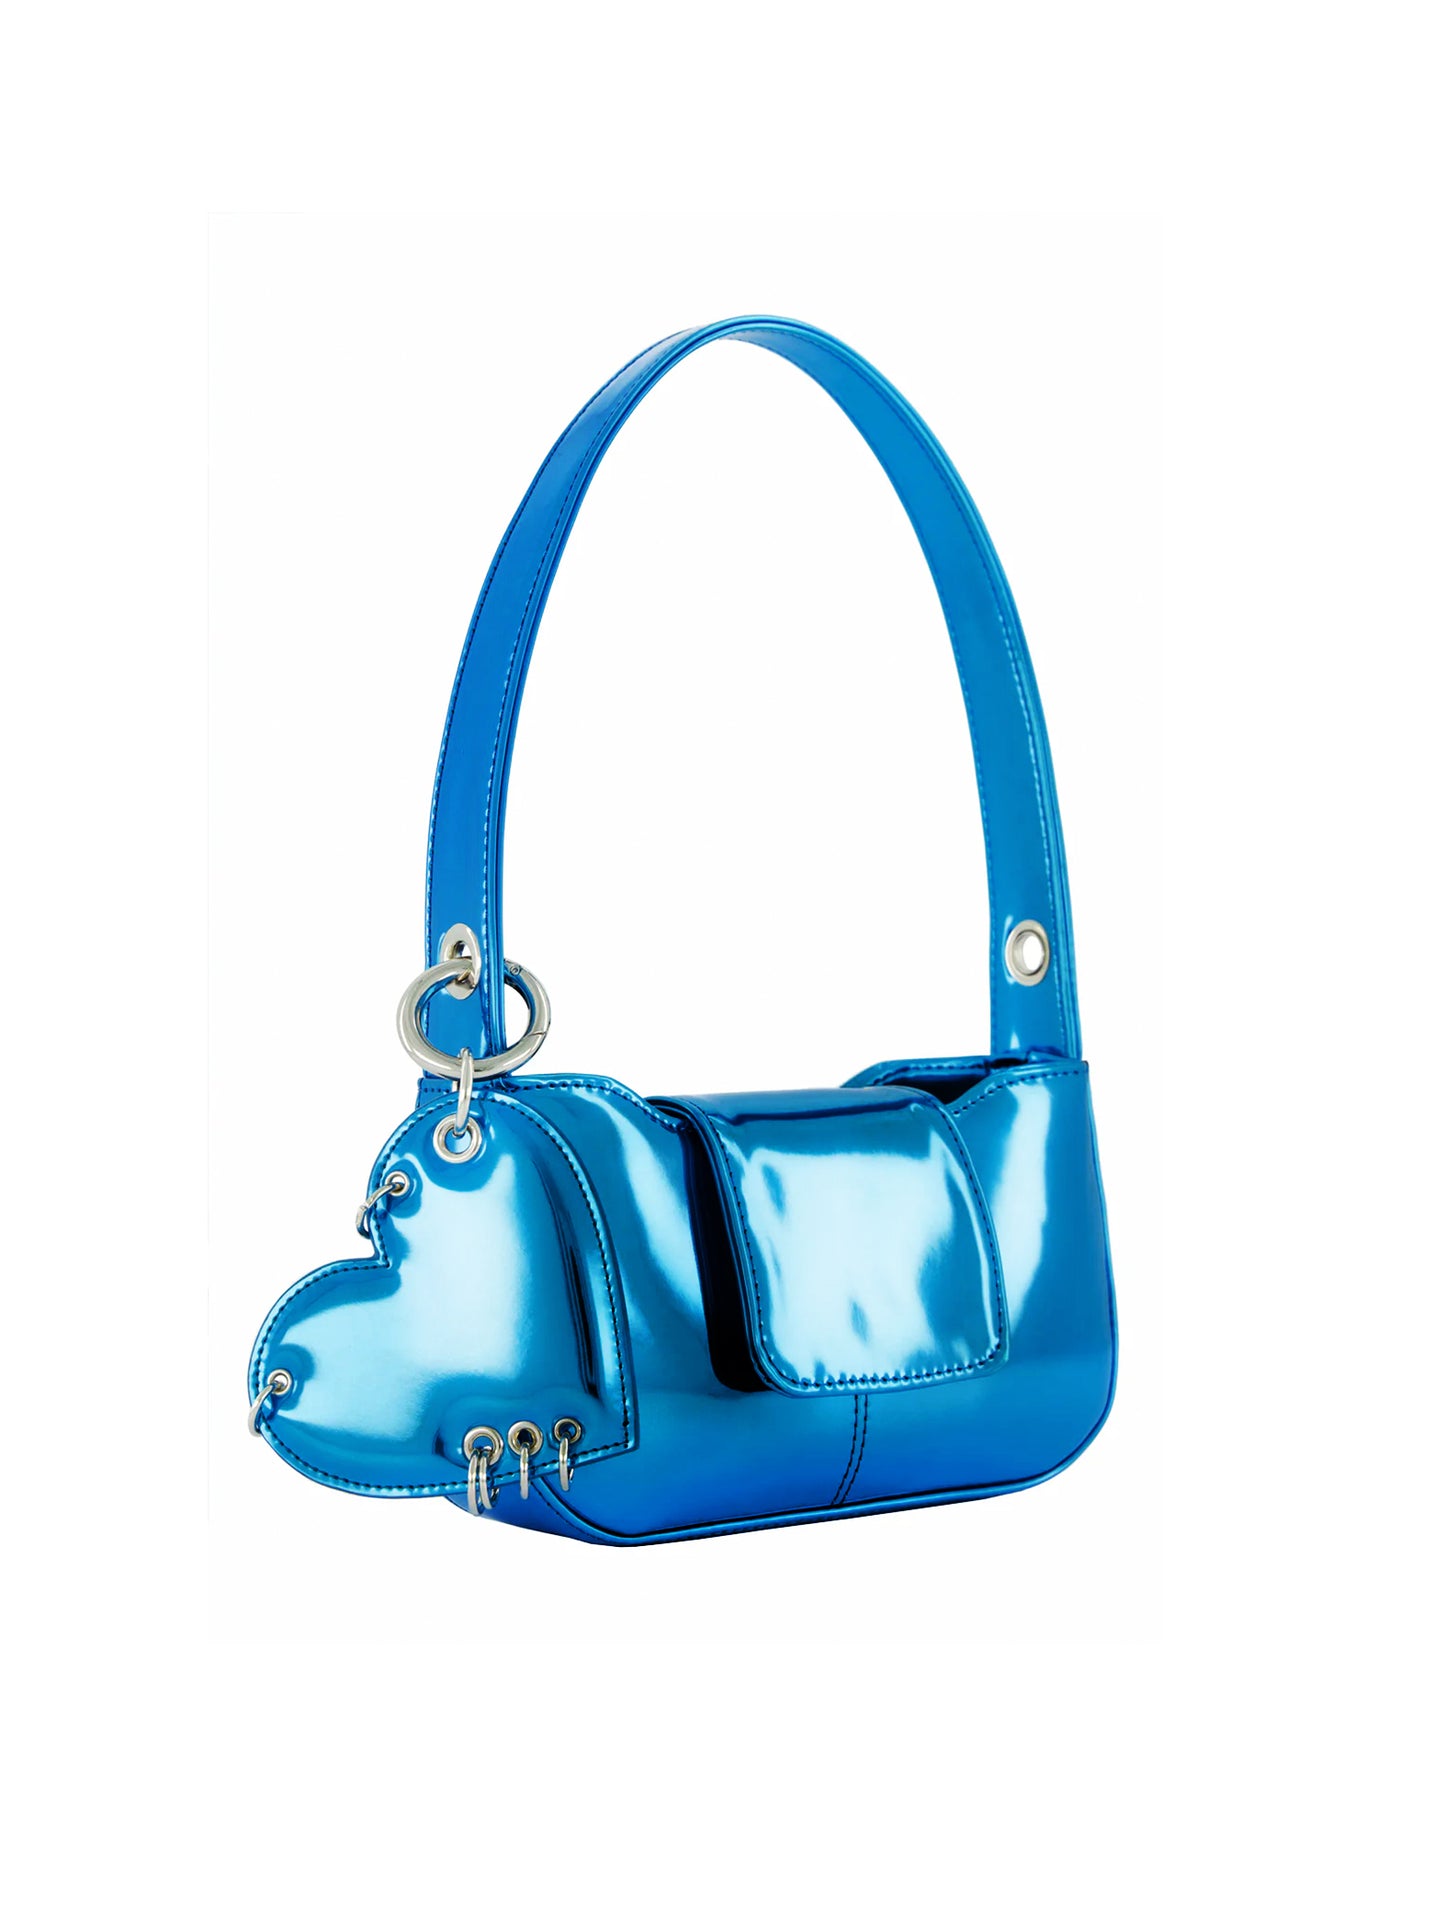 Justine Clenquet Dylan Metallic Blue Bag